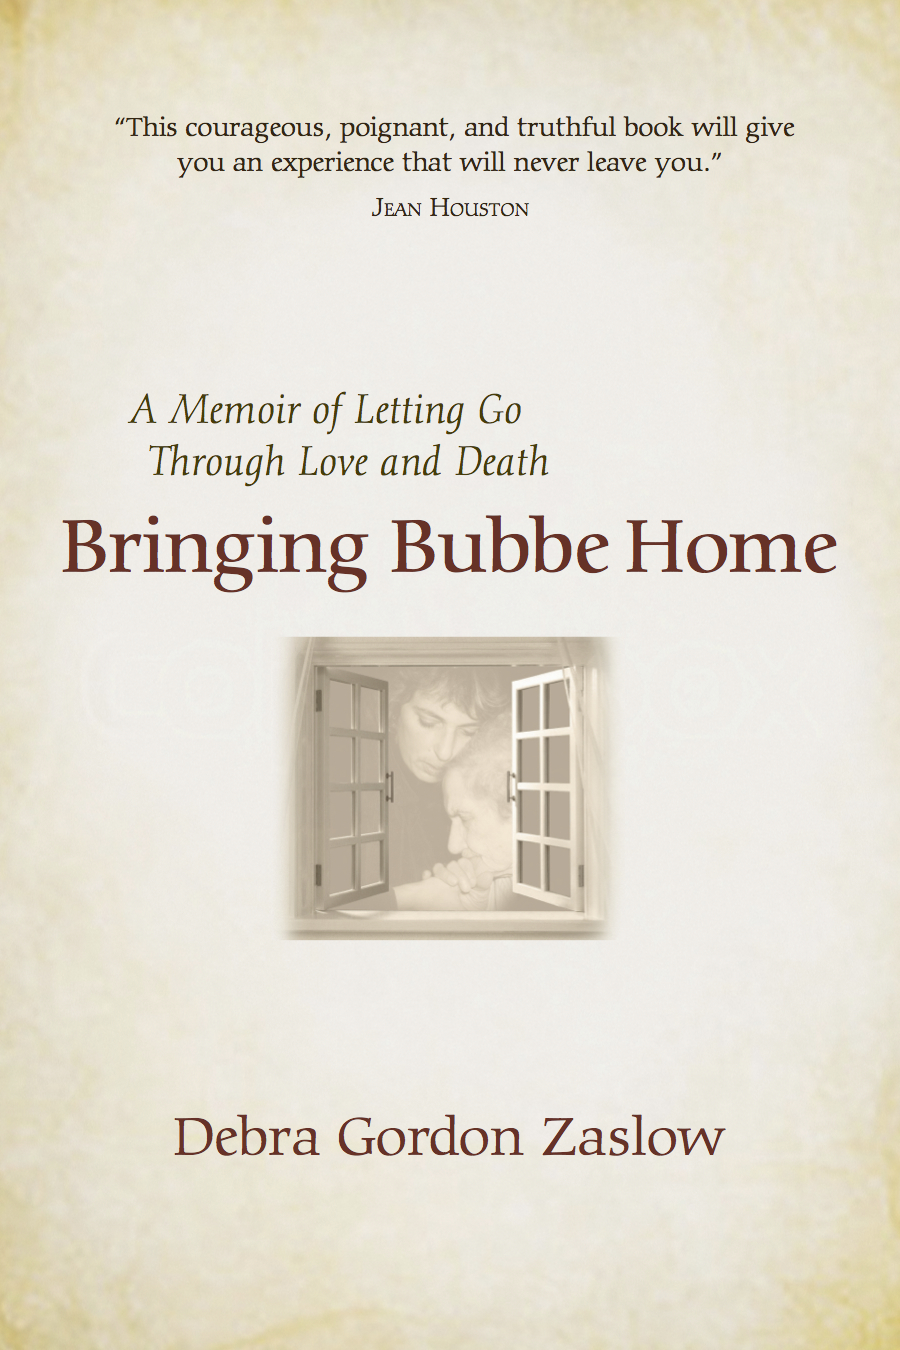 Bringing Bubbe Home by Debra Zaslow